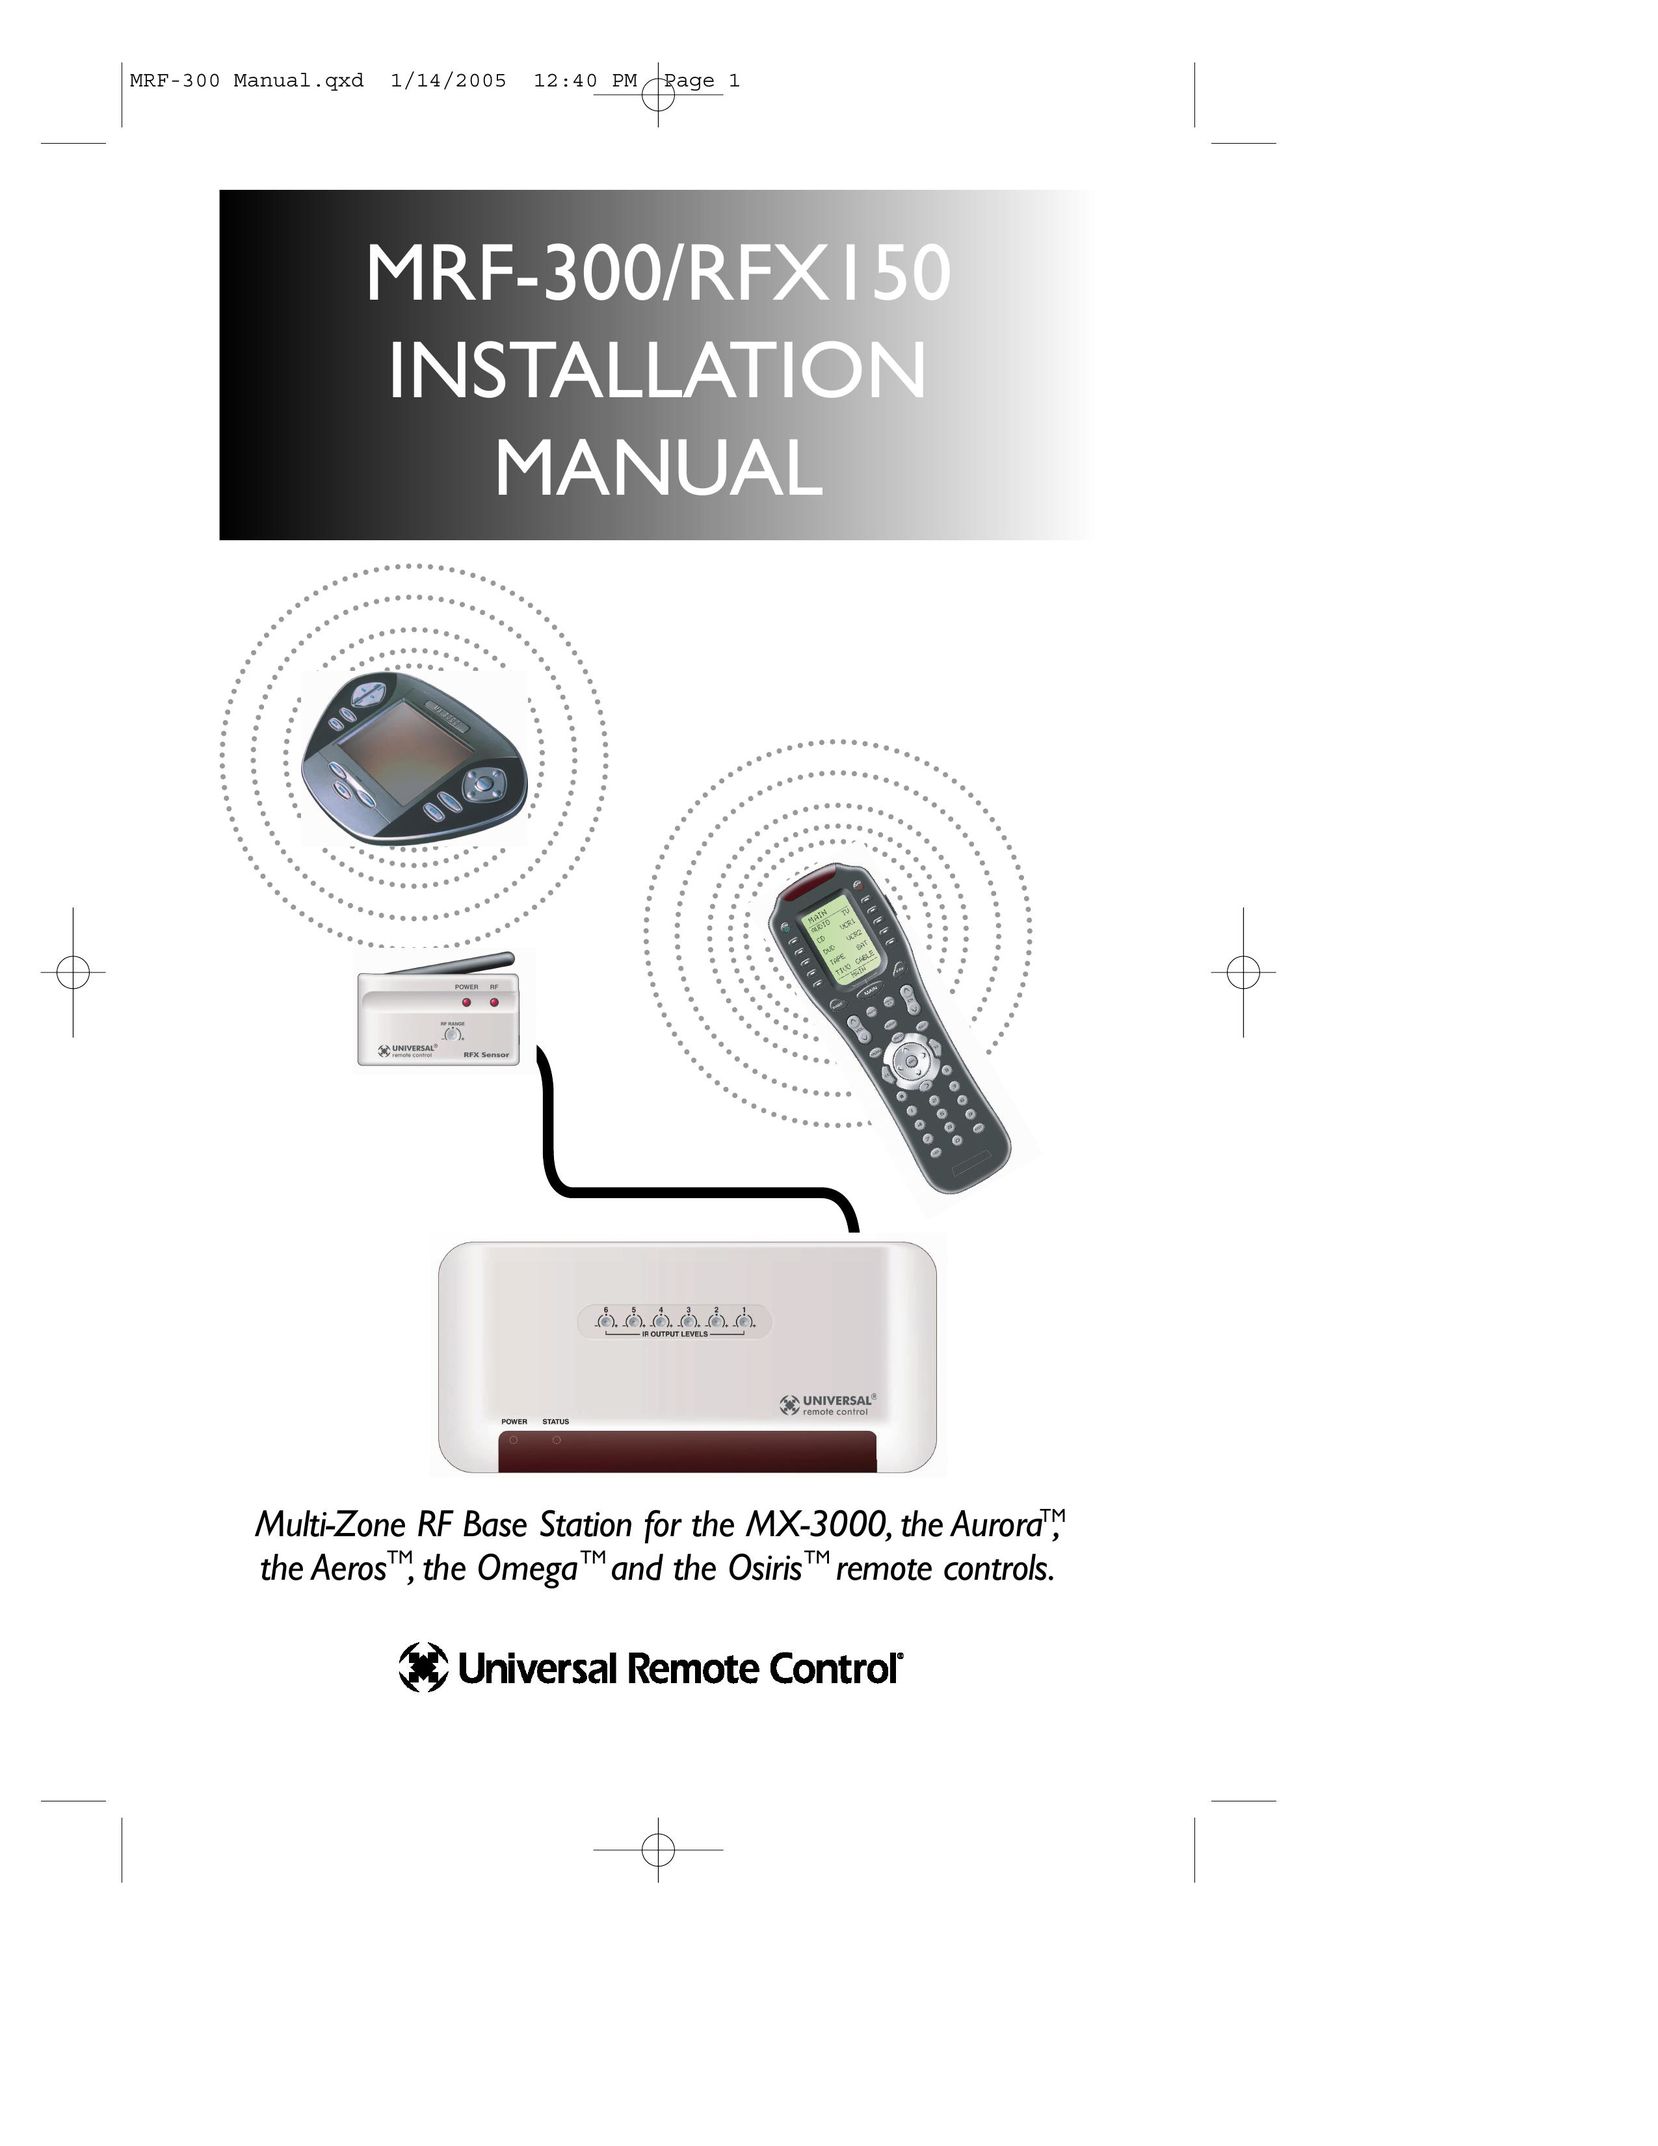 Universal Remote Control MRF-300/RFX150 Universal Remote User Manual